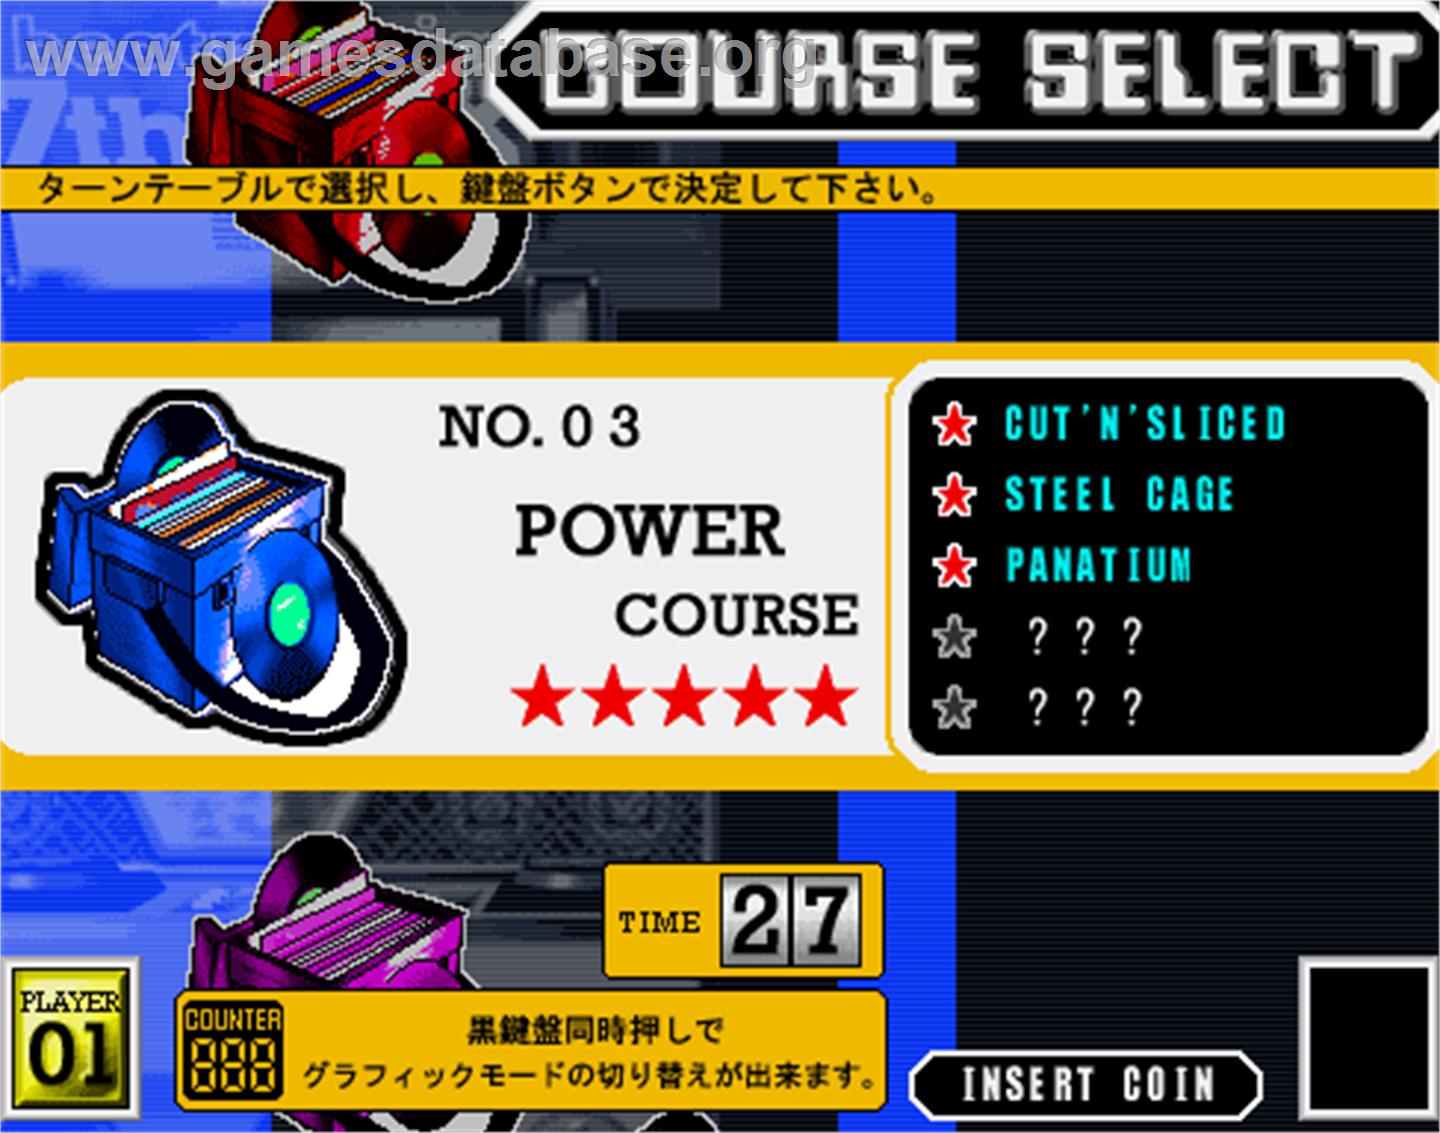 beatmania 7th MIX - Arcade - Artwork - Select Screen